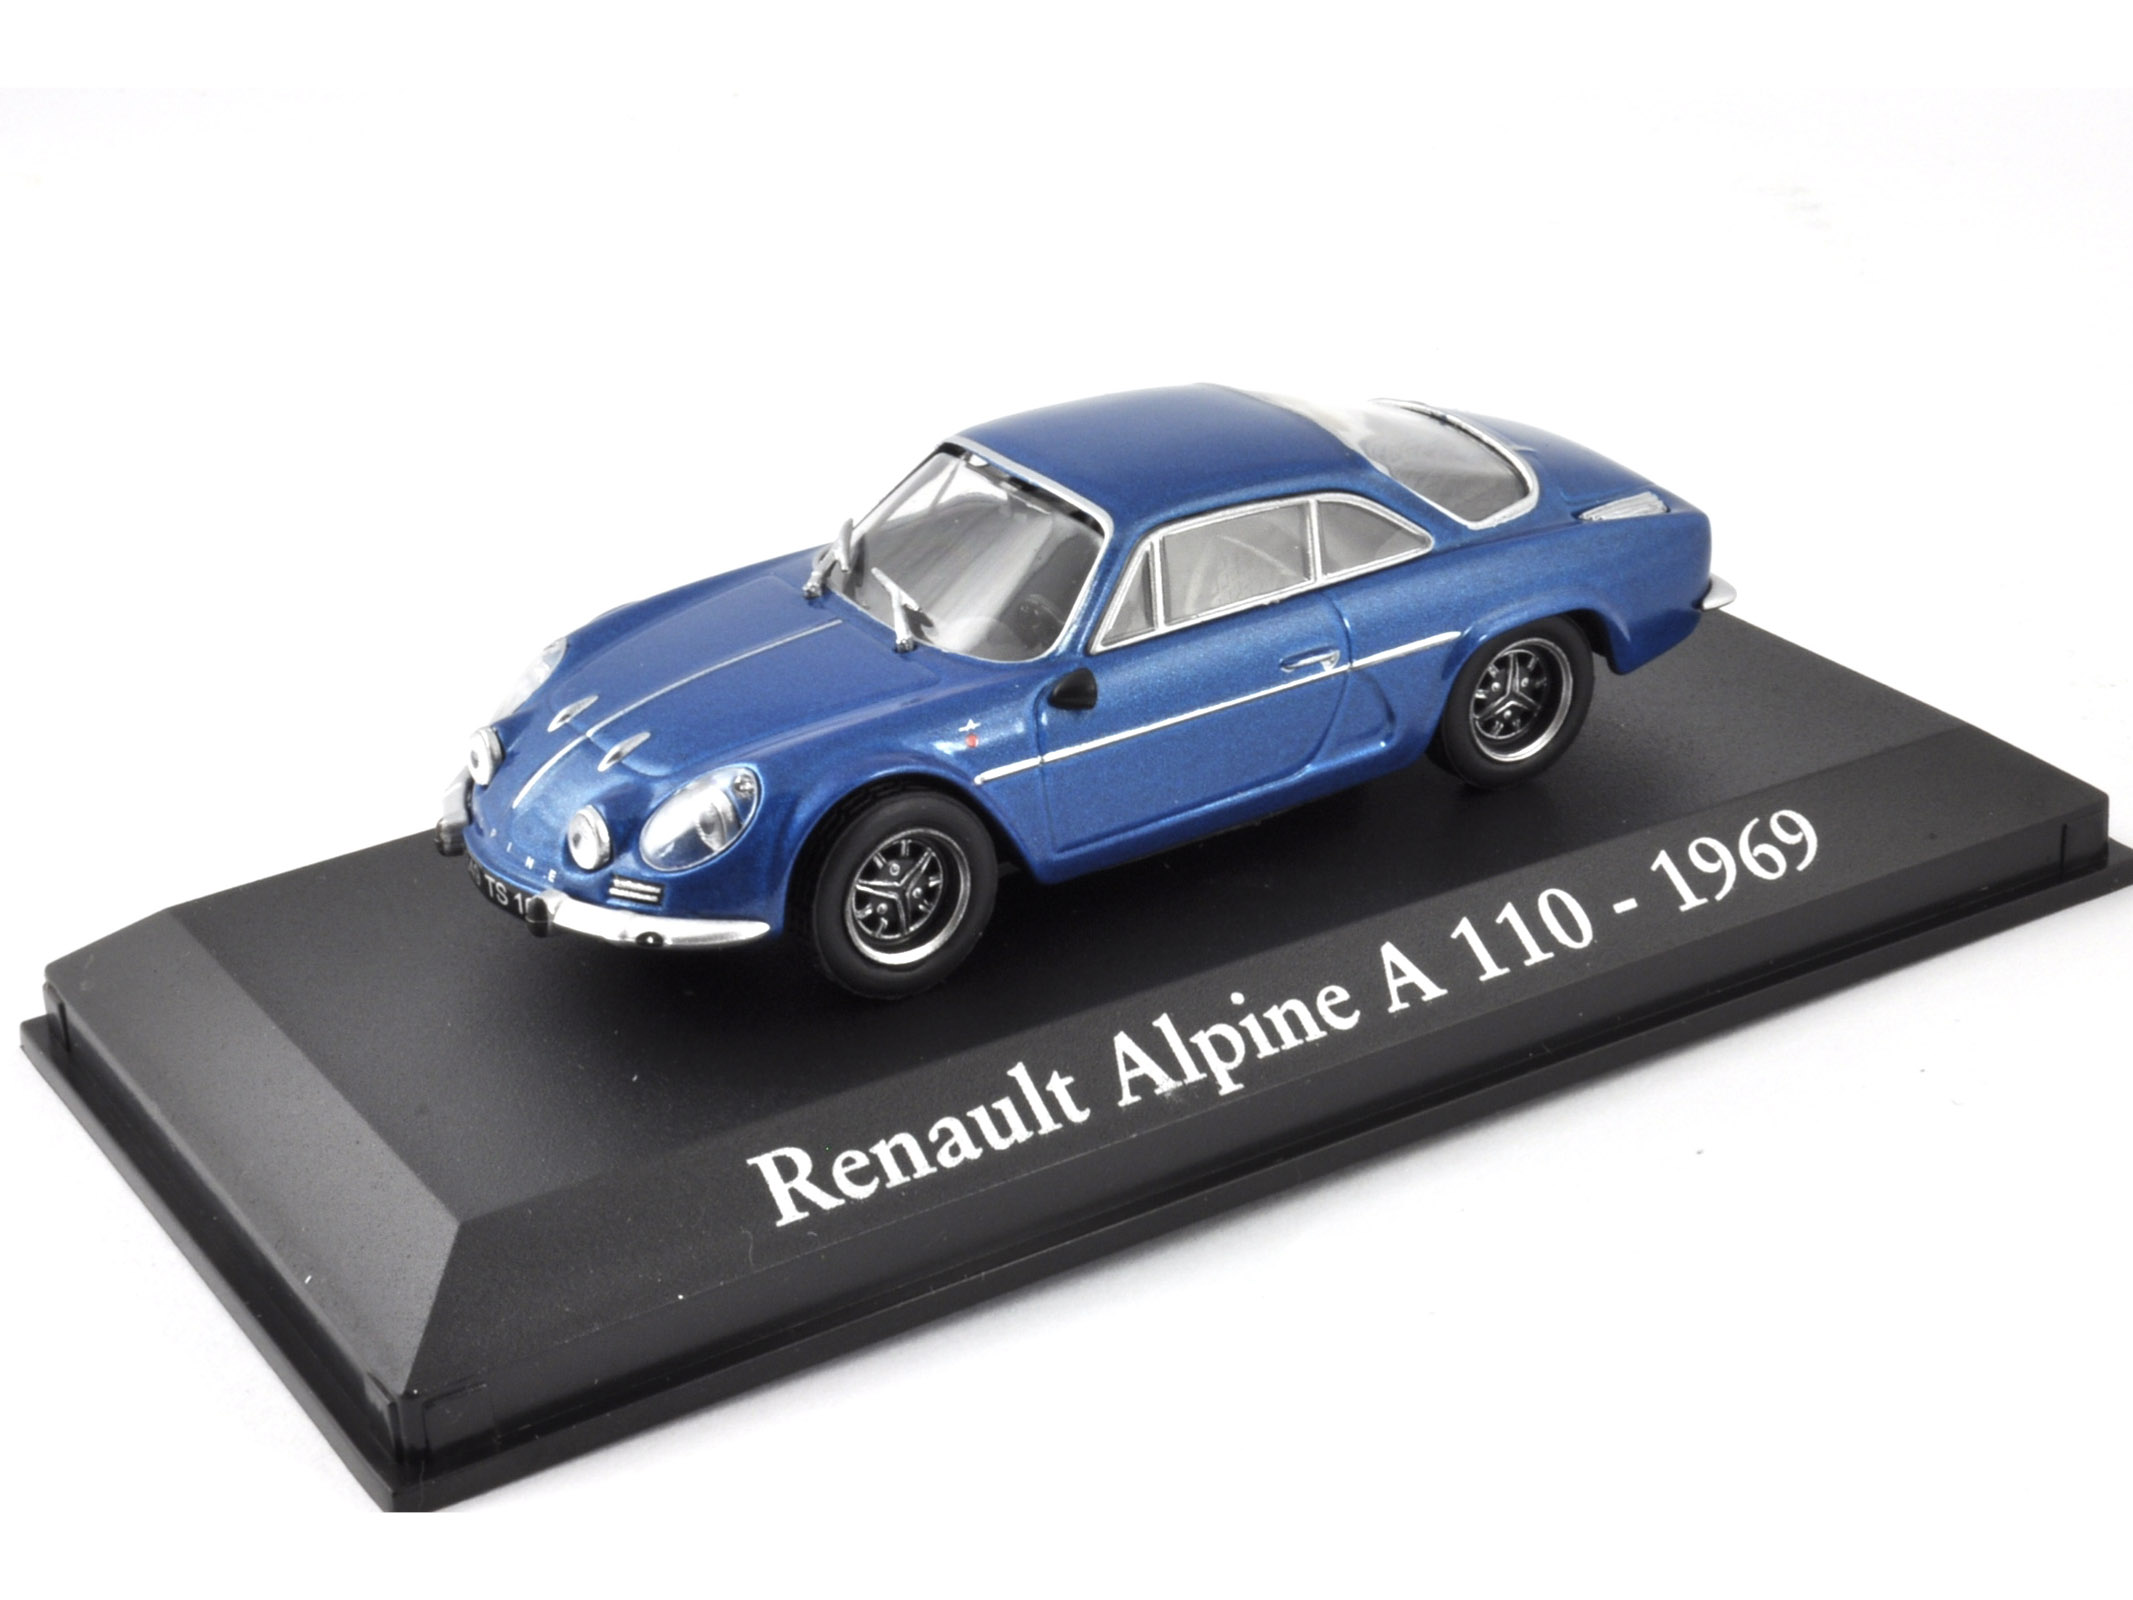 Renault Alpine A110 - 1969